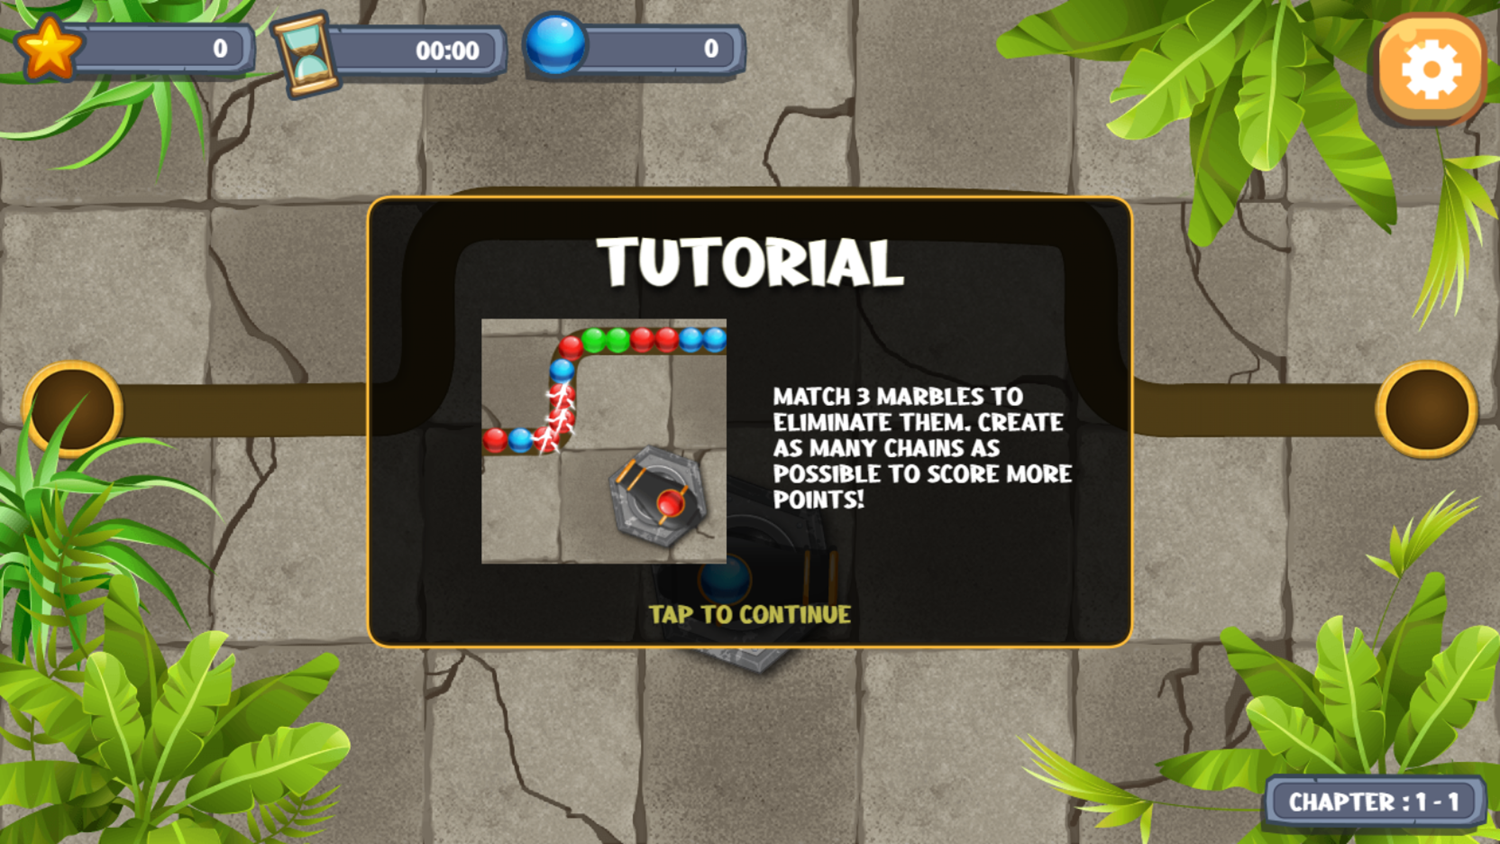 Marble Blast Game Tutorial Screenshot.